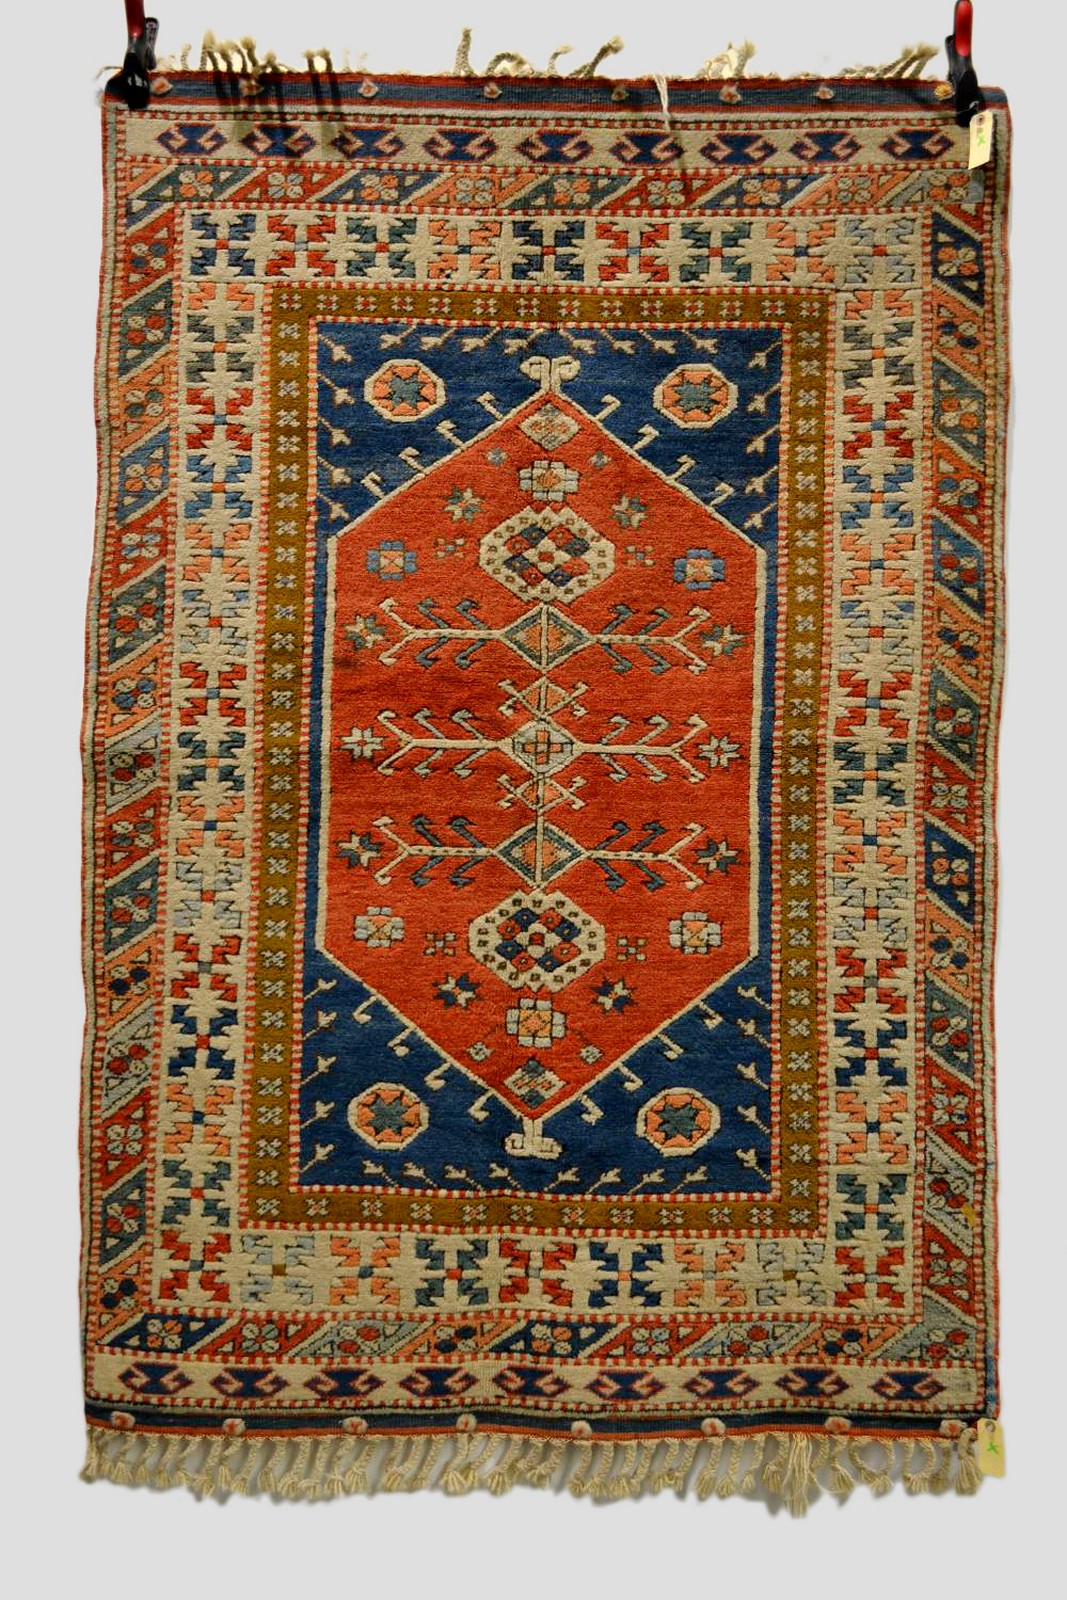 Kars Kazak rug, east Anatolia, mid-20th century, 5ft. 8in. x 3ft. 11in. 1.73m. x 1.20m.